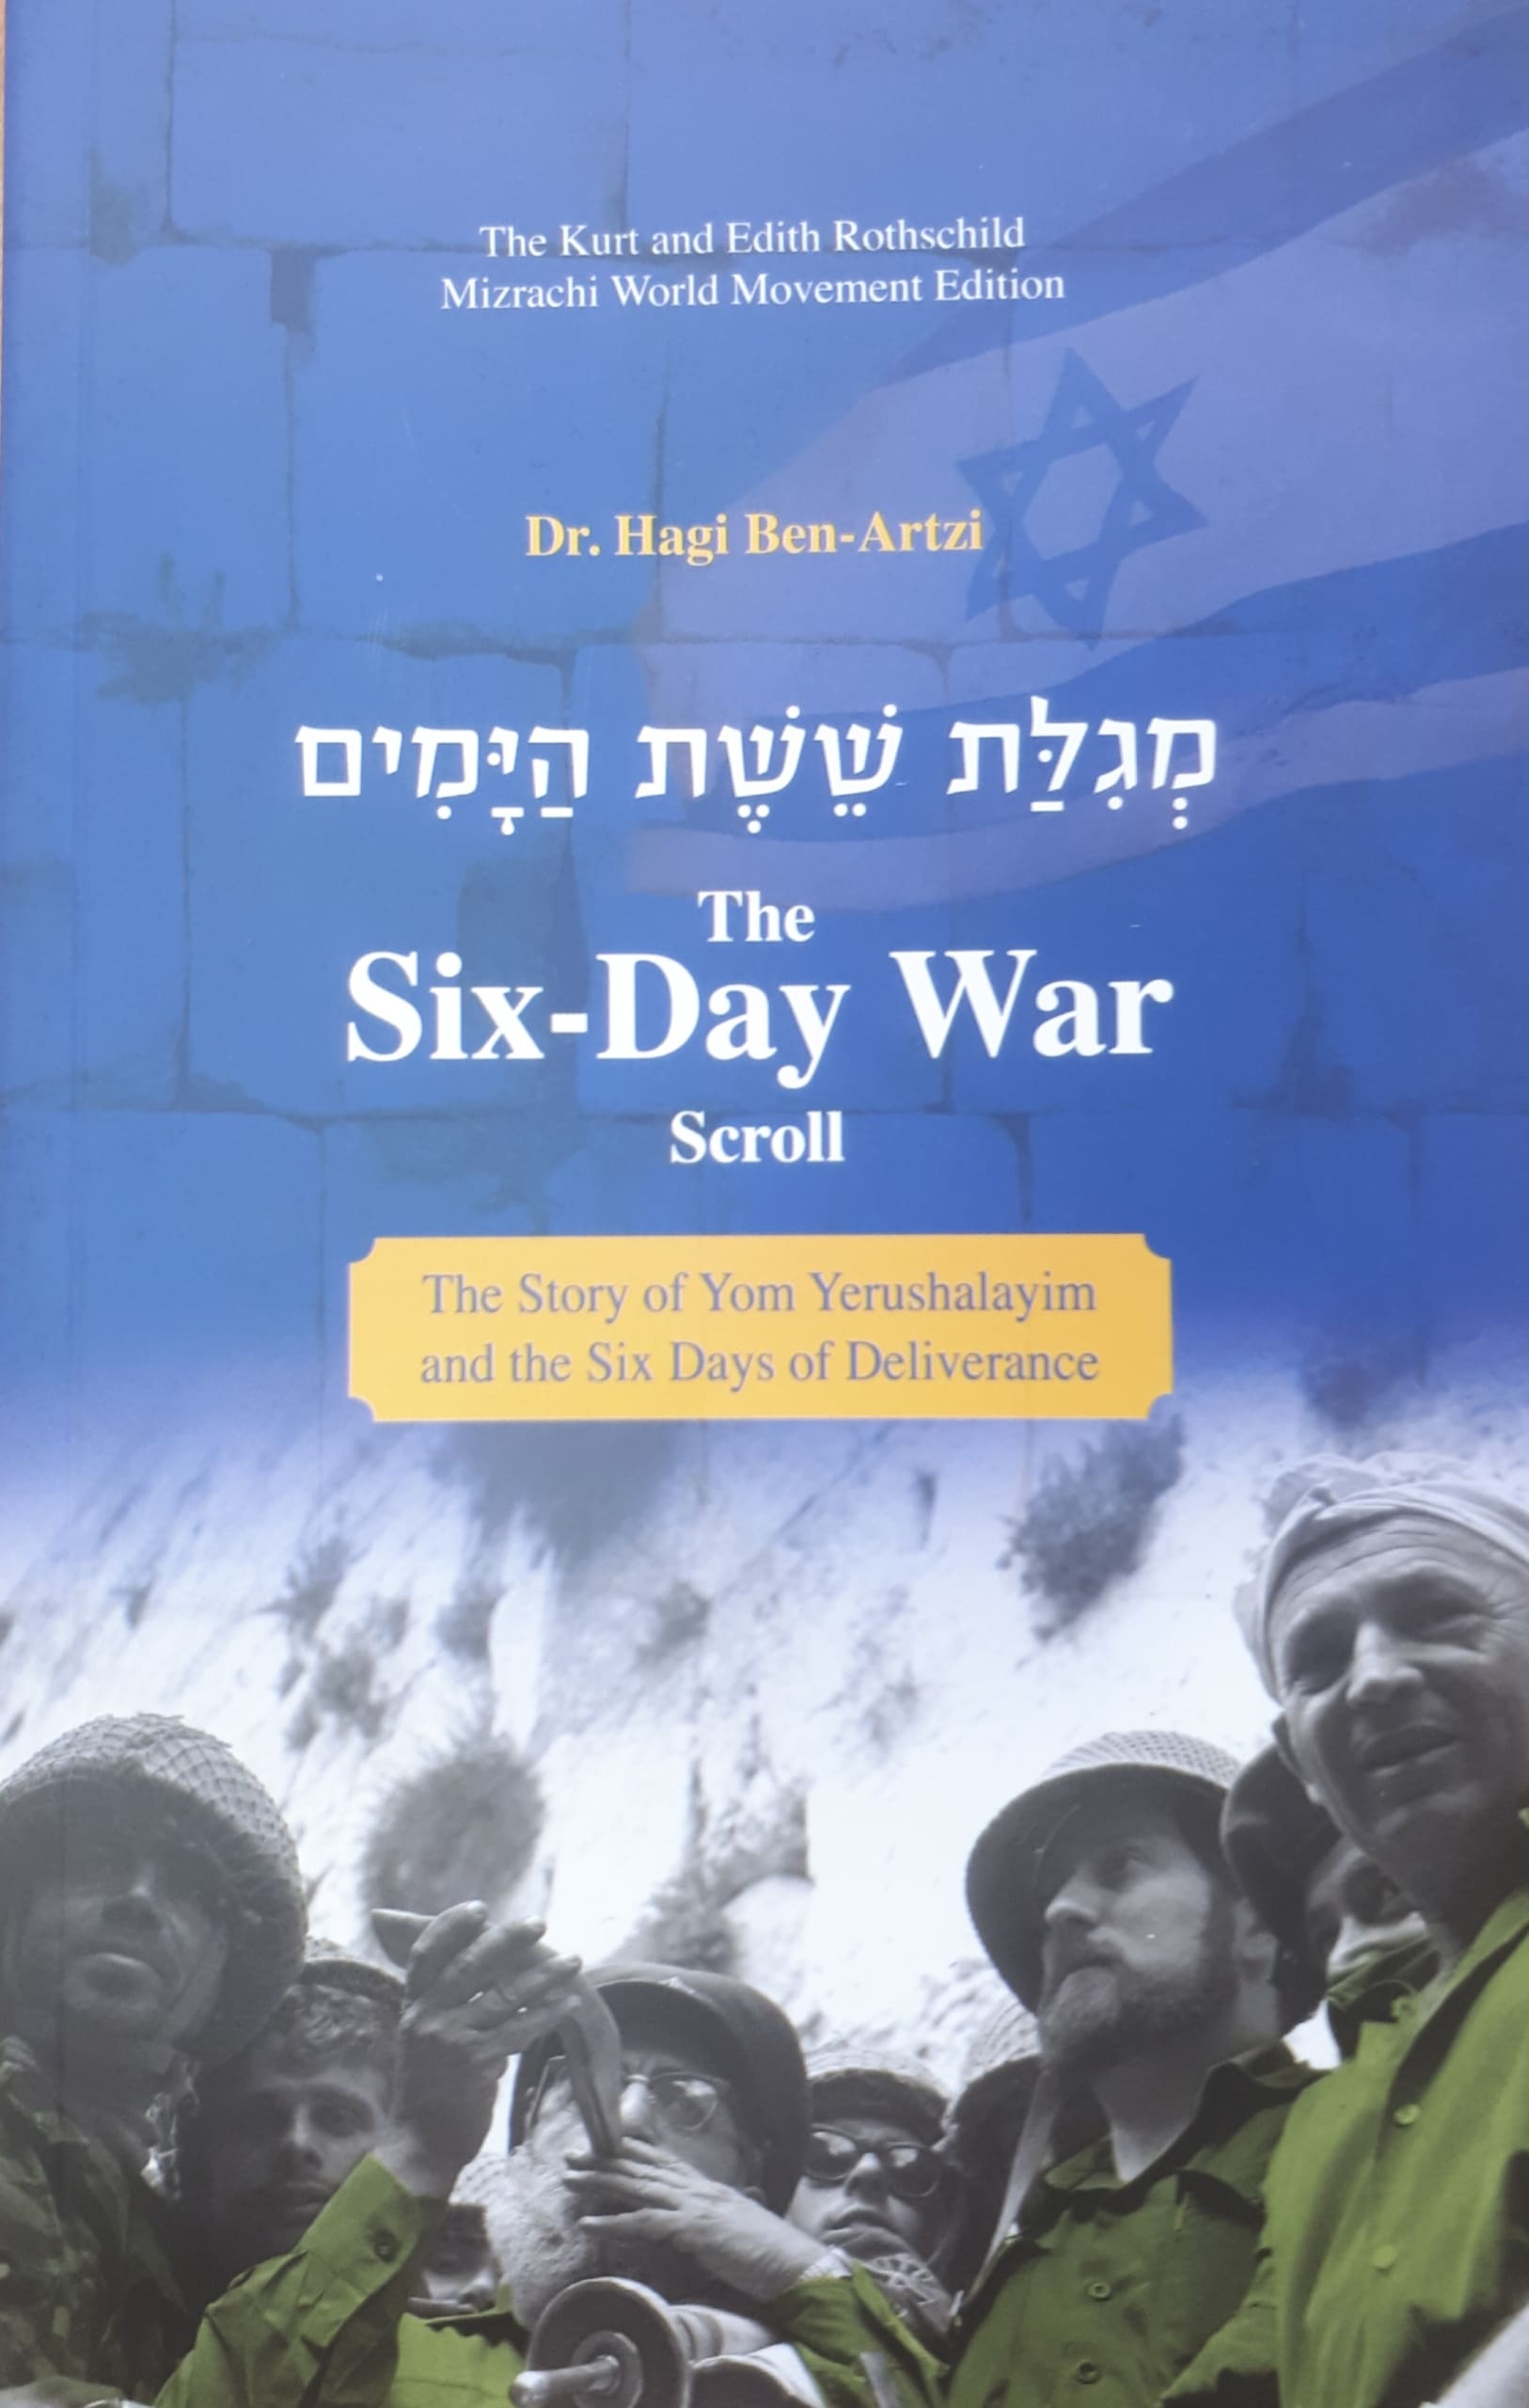 The Six-Day War Scroll